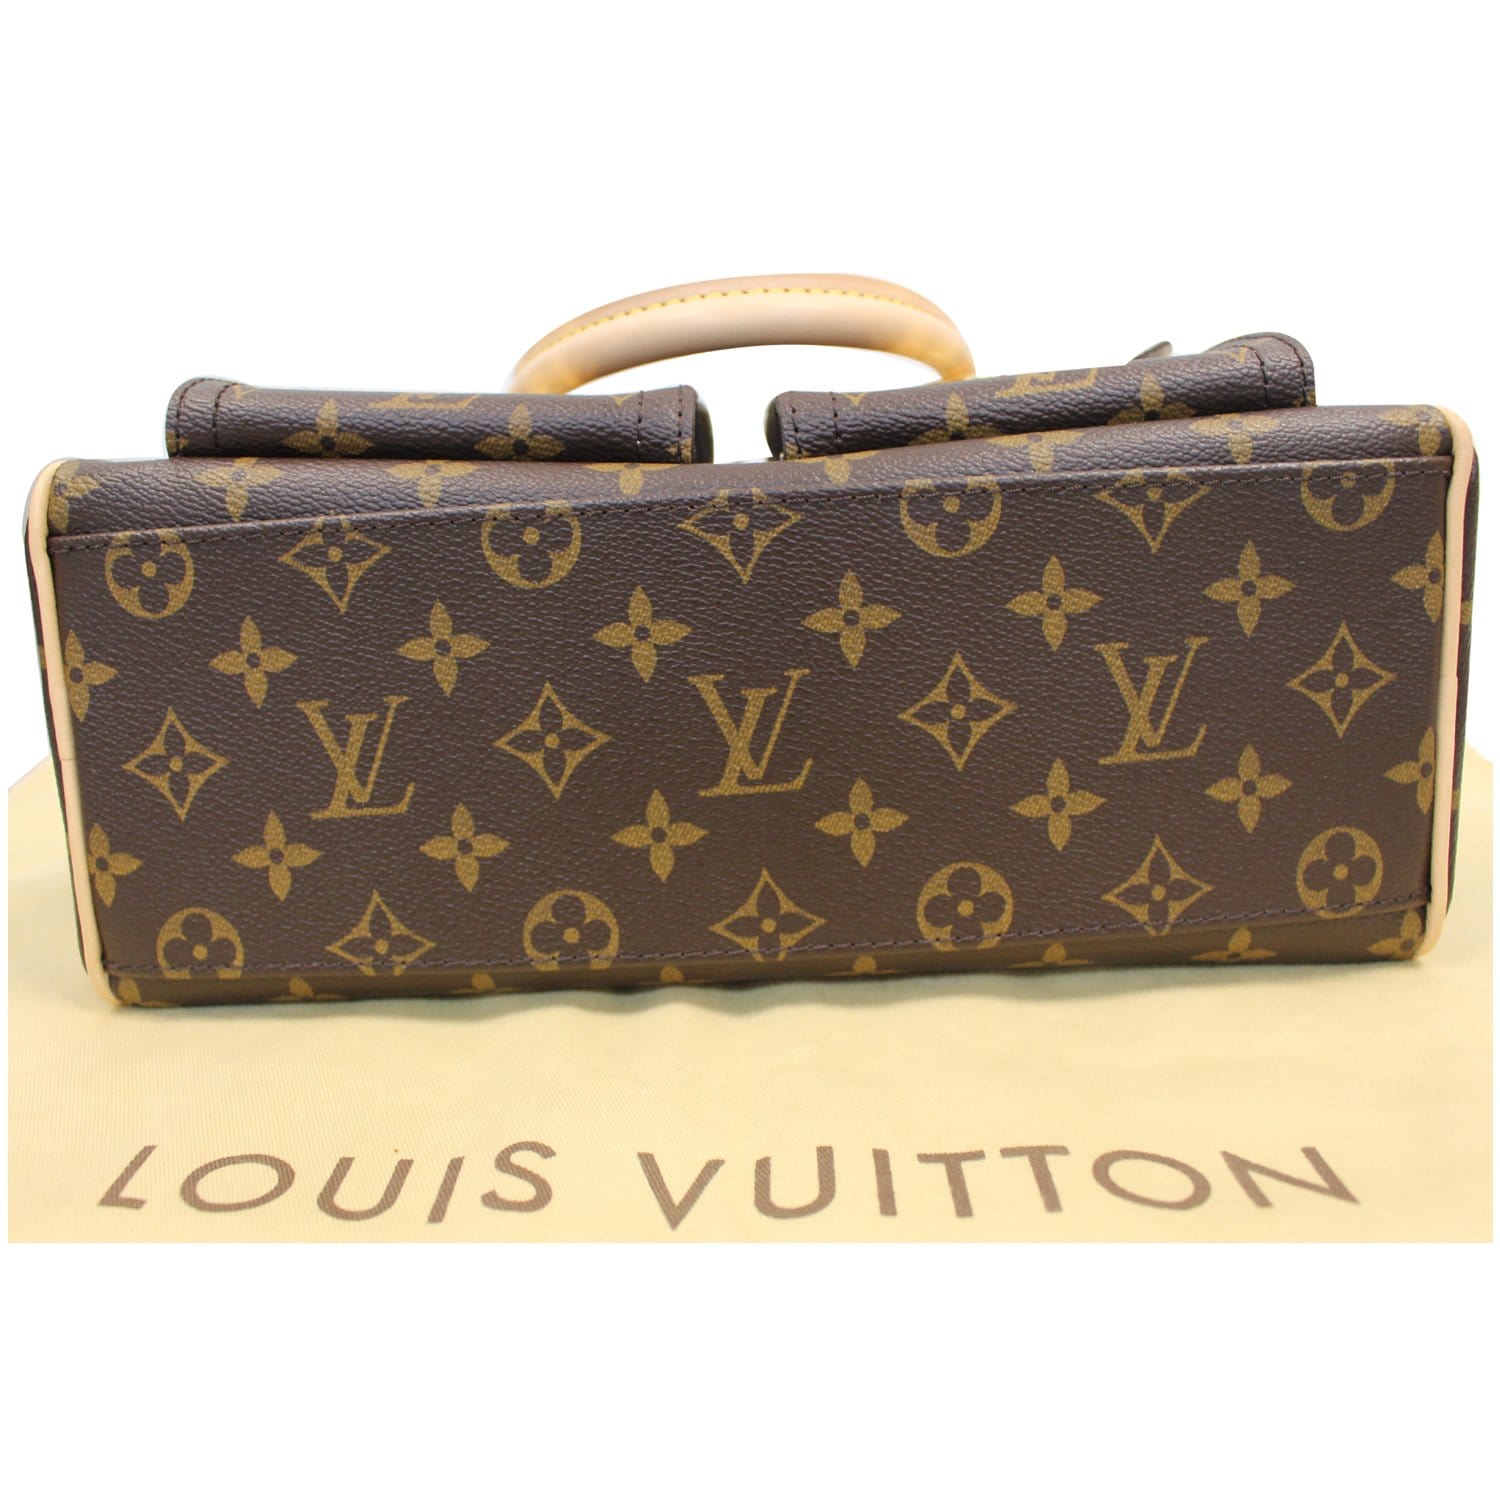 lv briefcase price